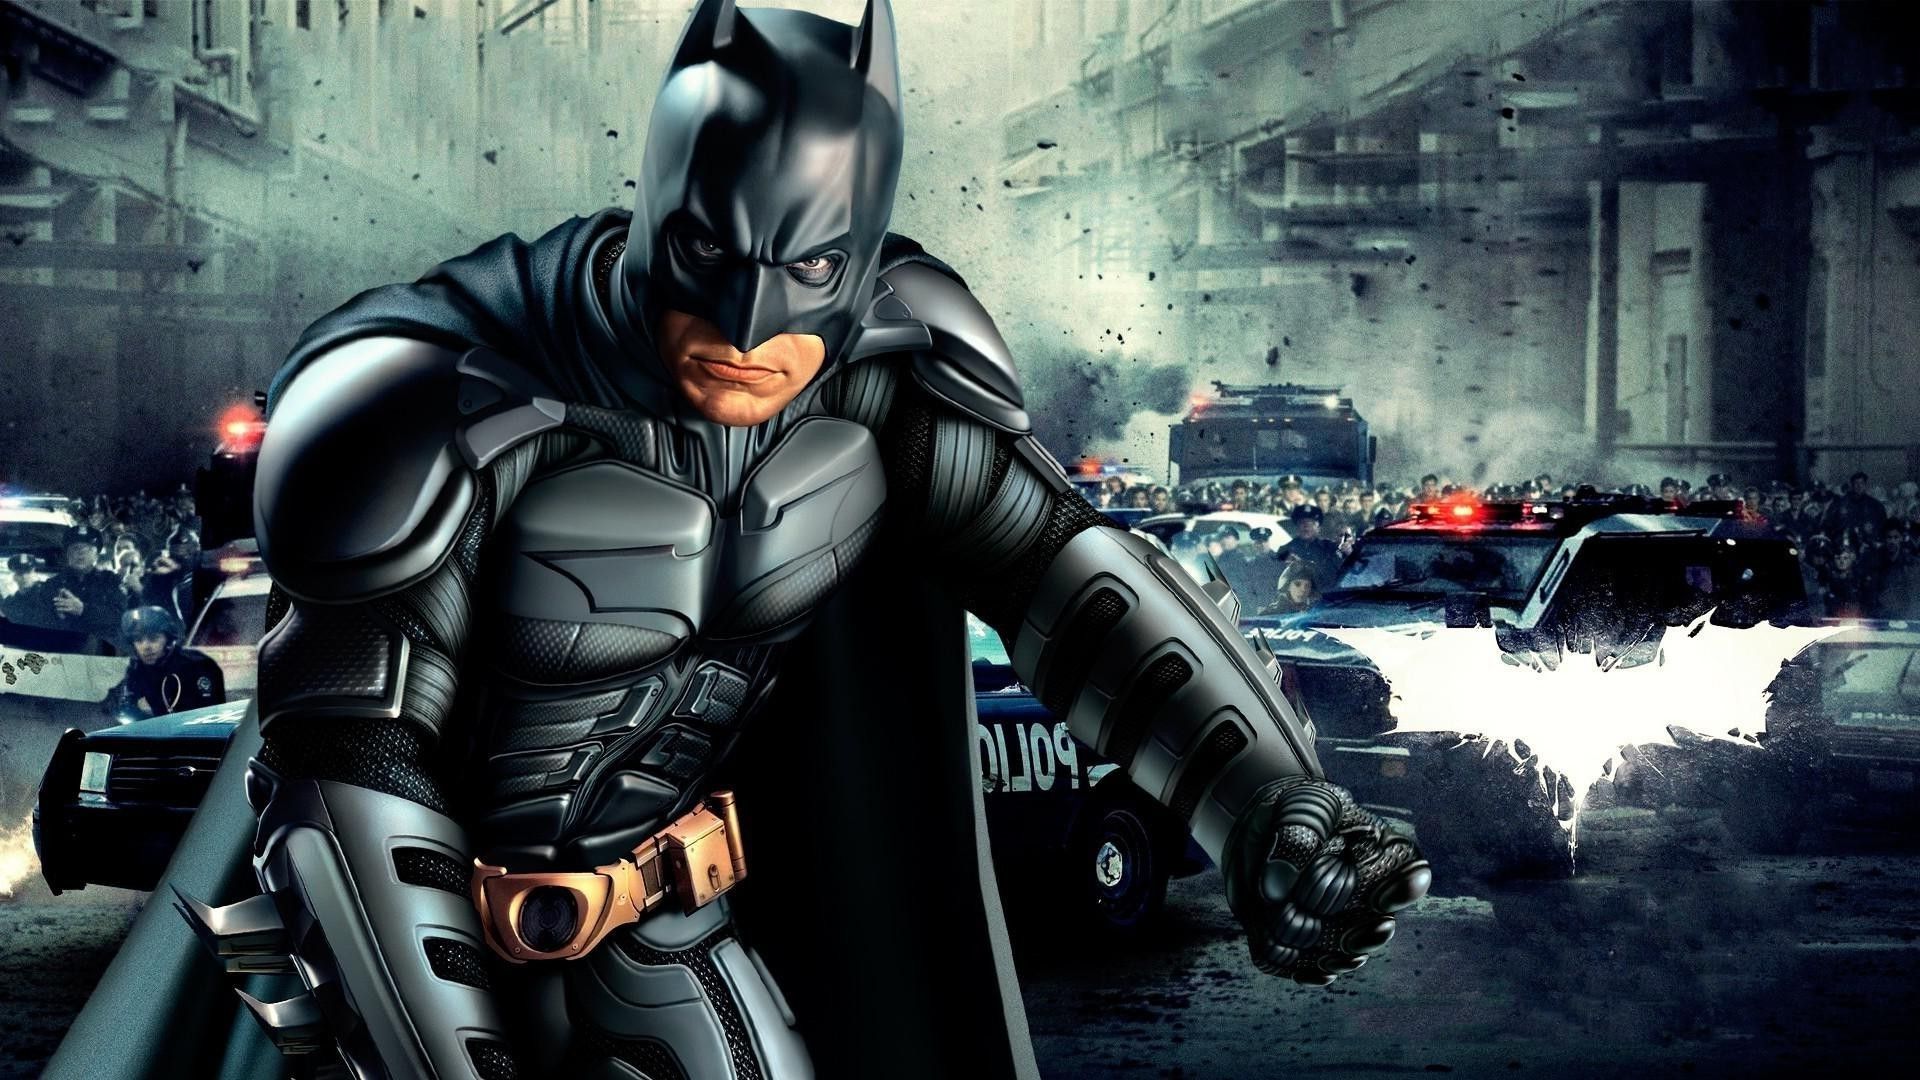 Batman, The Dark Knight Rises Wallpaper HD / Desktop 2021 Robert Pattinson HD Wallpaper